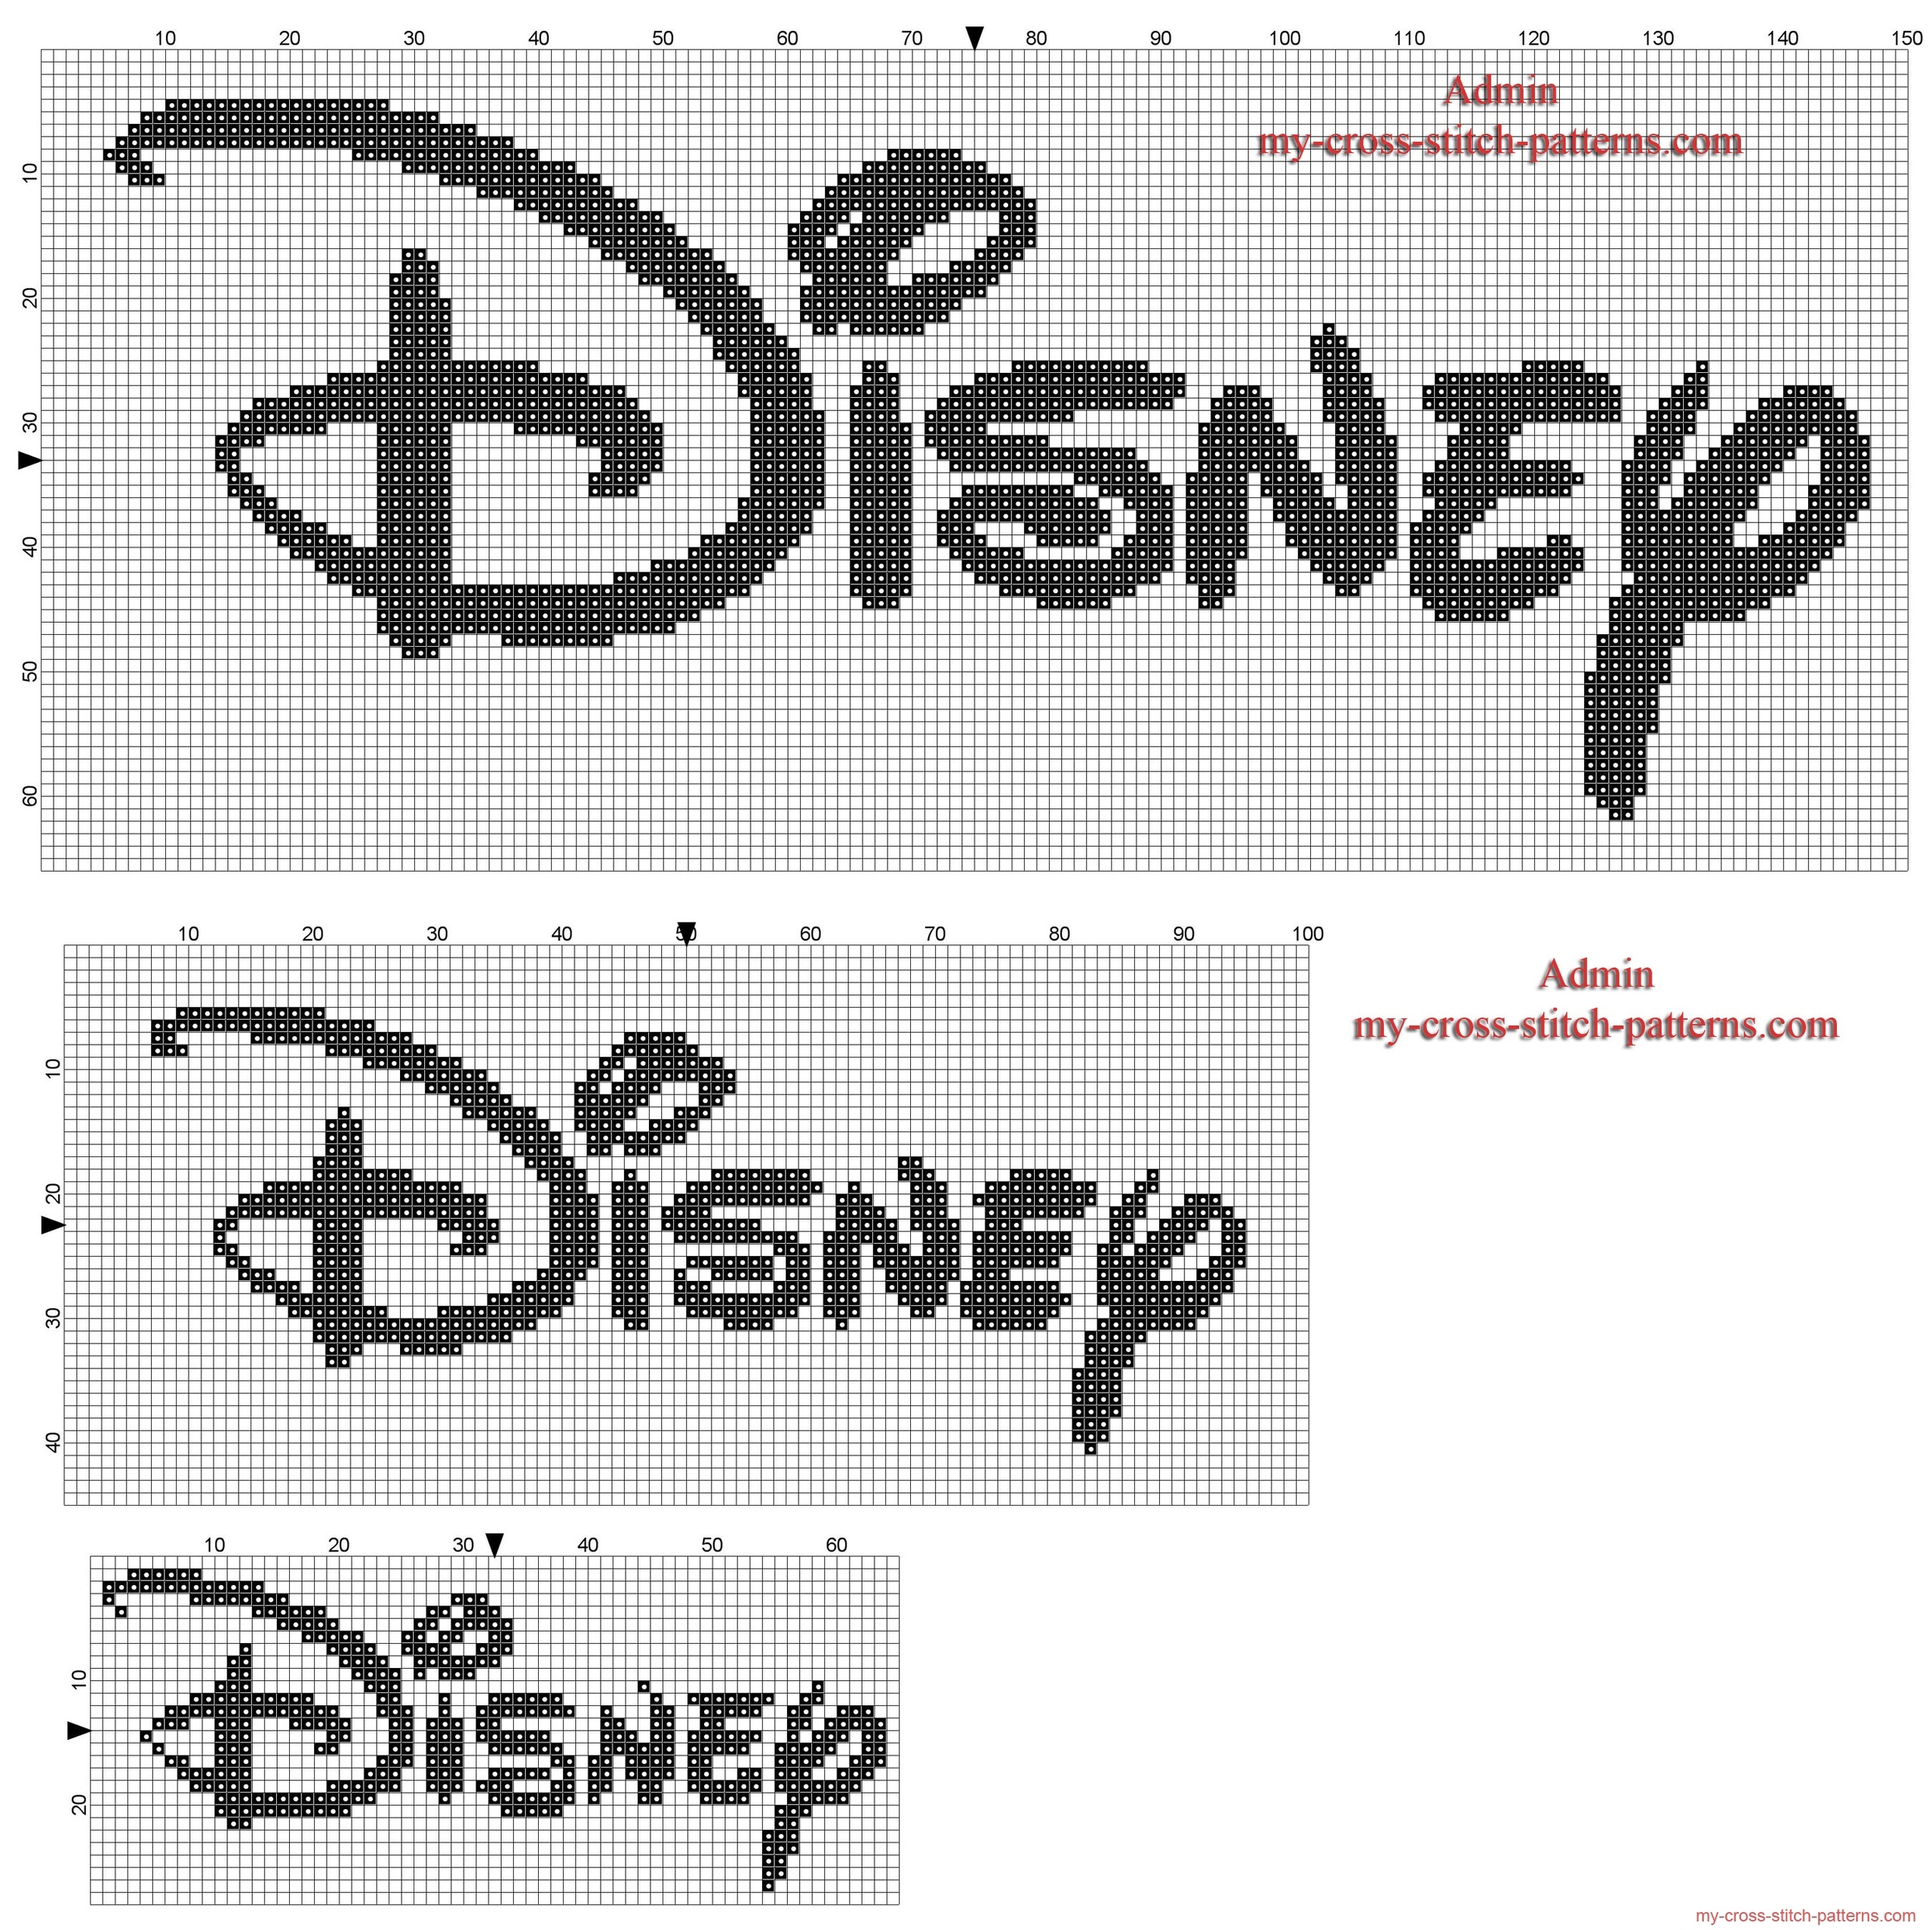 disney_logo_cross_stitch_patterns_150_100_and_65_stitches_width